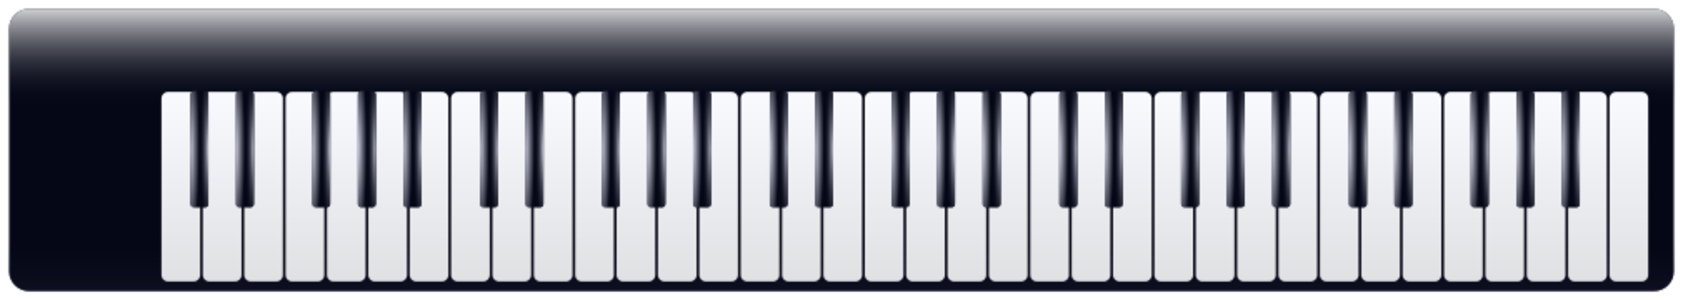 clip art clipart image svg openclipart black 音乐 play instrument concert white cartoon media keyboard grand piano keys pianino 剪贴画 卡通 黑色 白色 多媒体 乐器 键盘